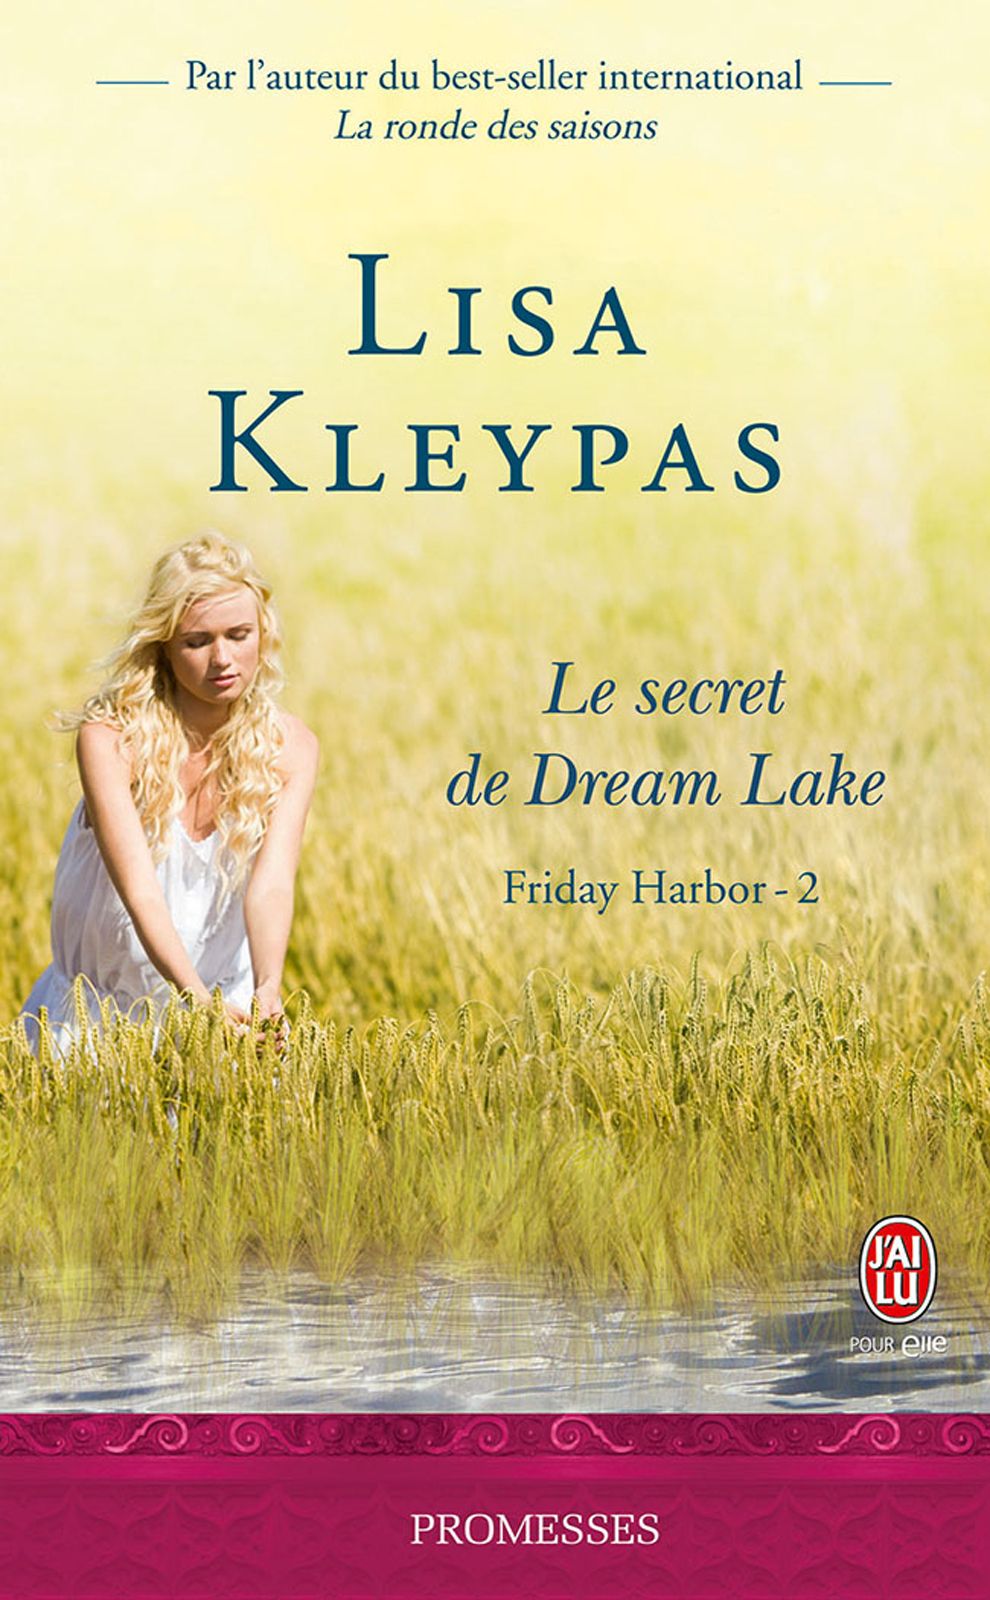 Friday Harbor (Tome 2) - Le secret de Dream Lake